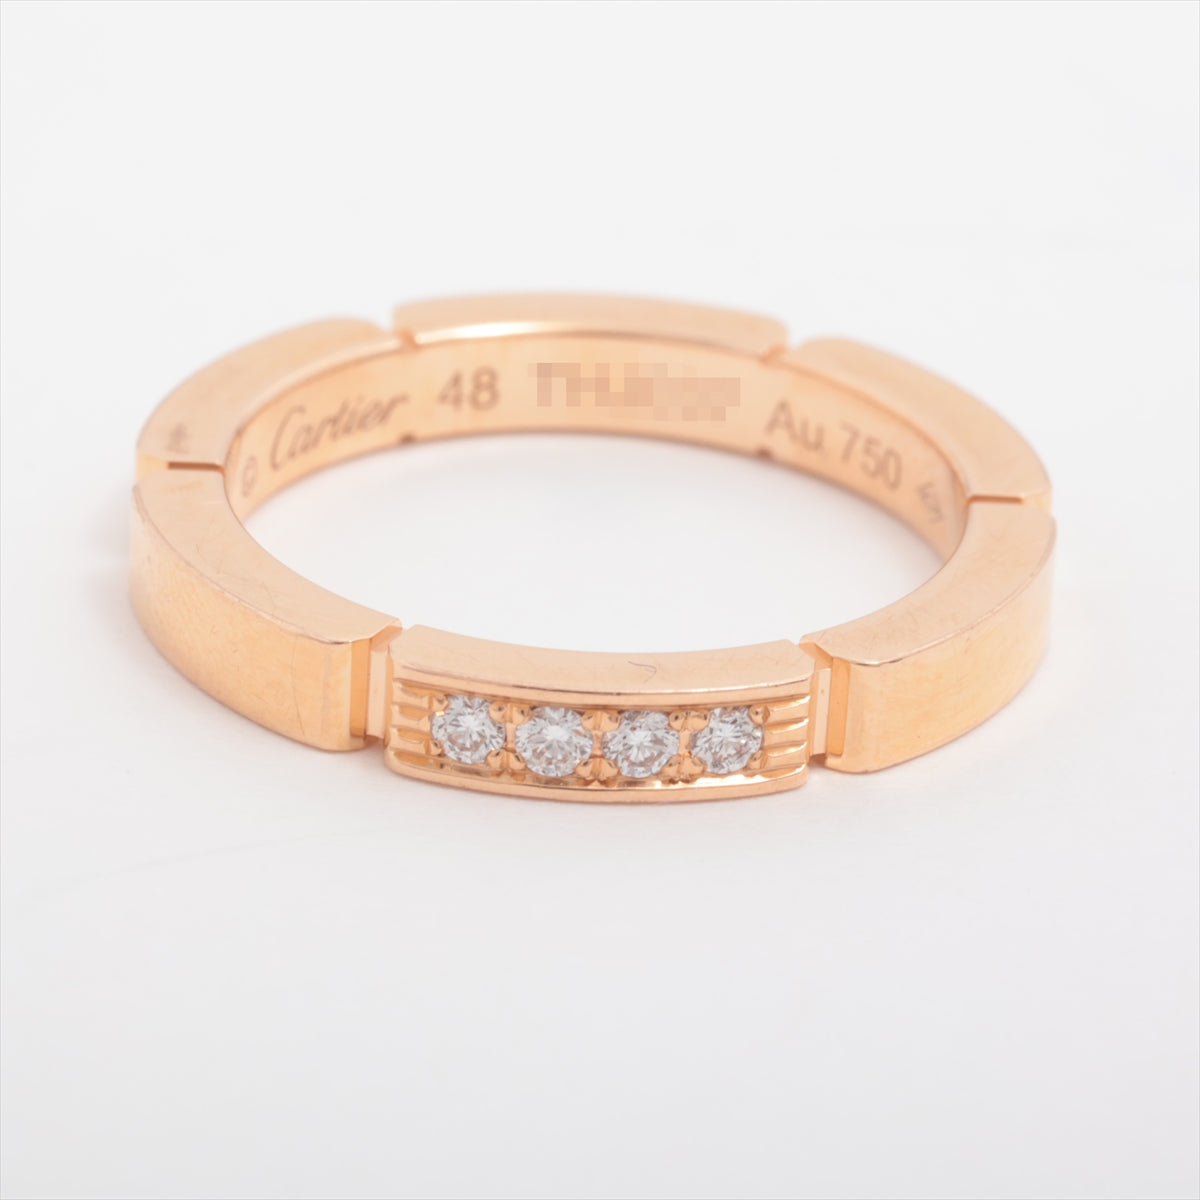 Cartier 4P Diamond Ring 750 (PG) 3.8g 48 G